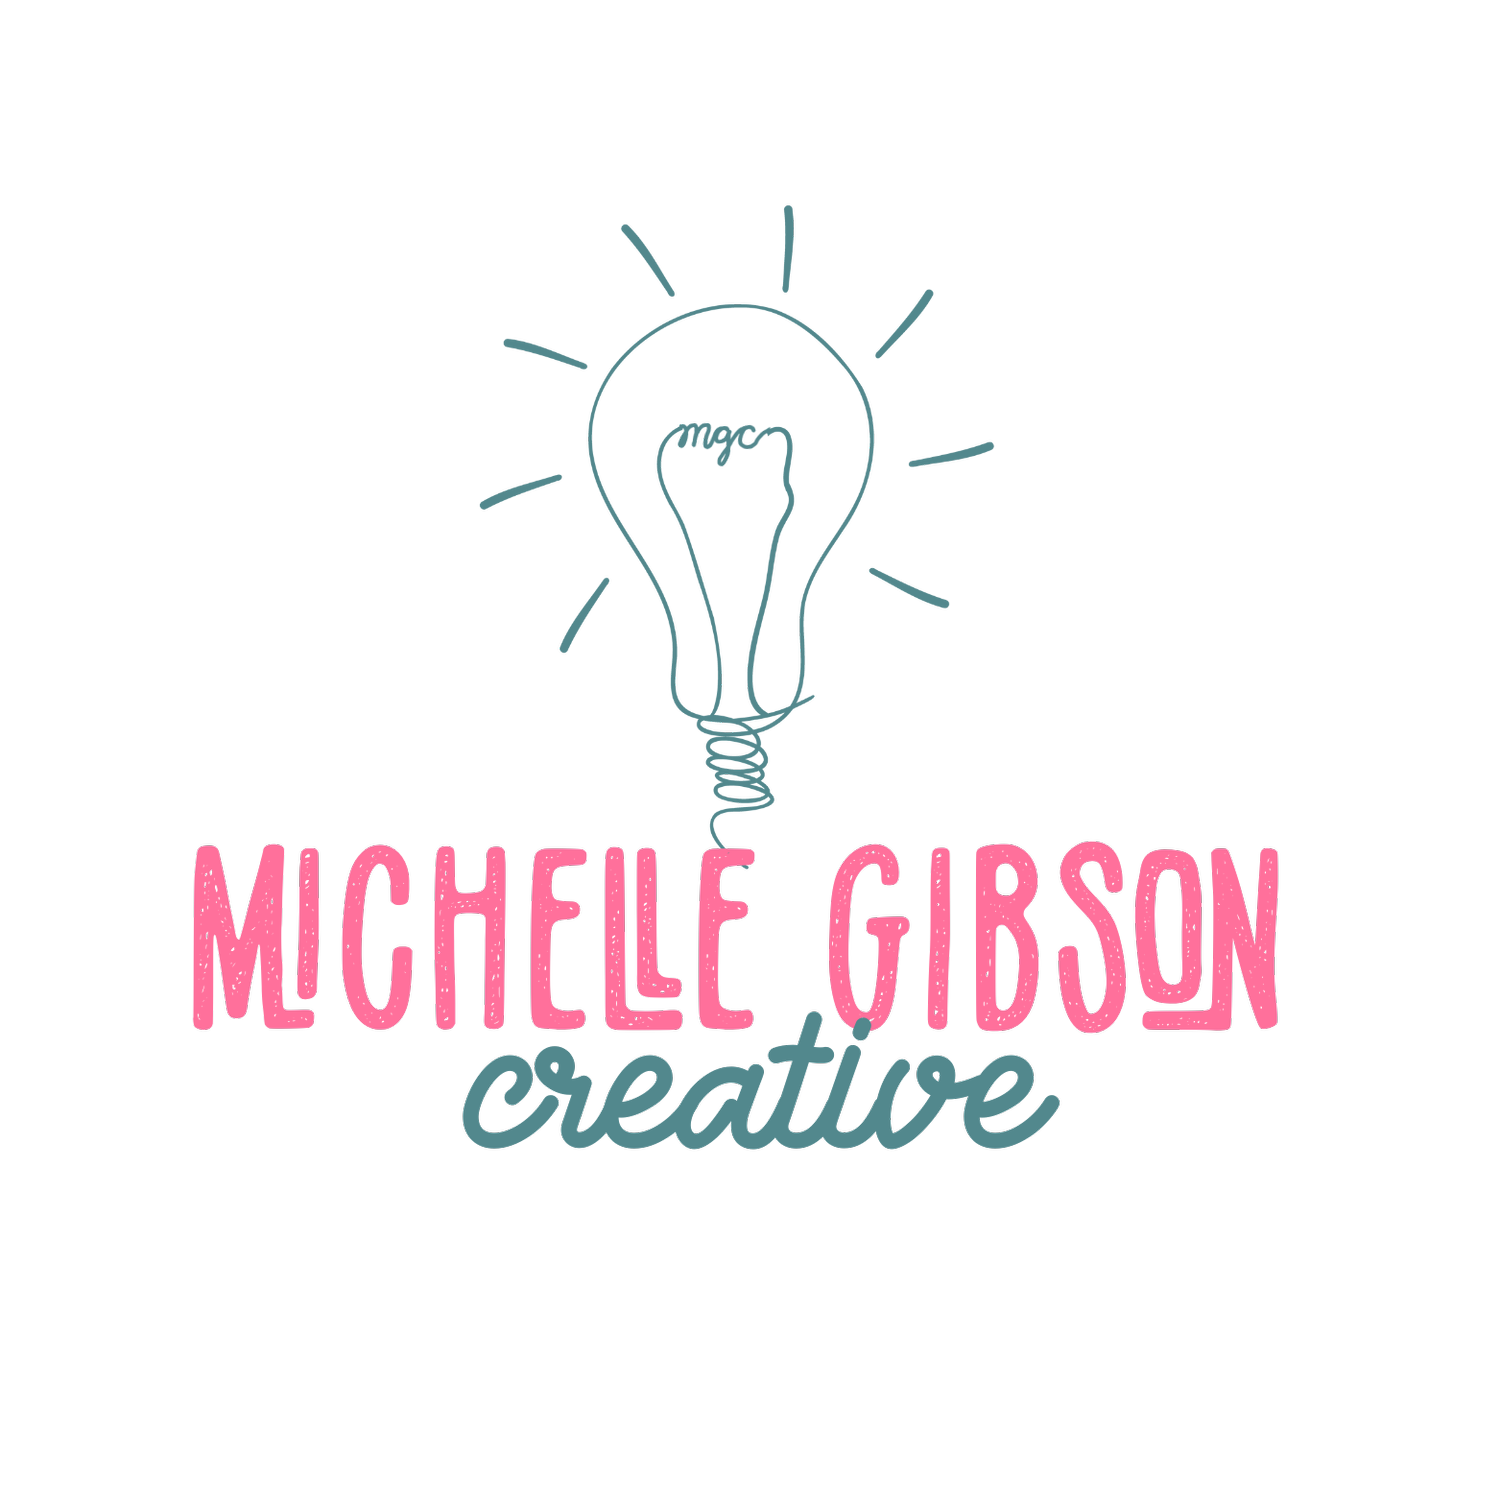 Michelle Gibson Creative